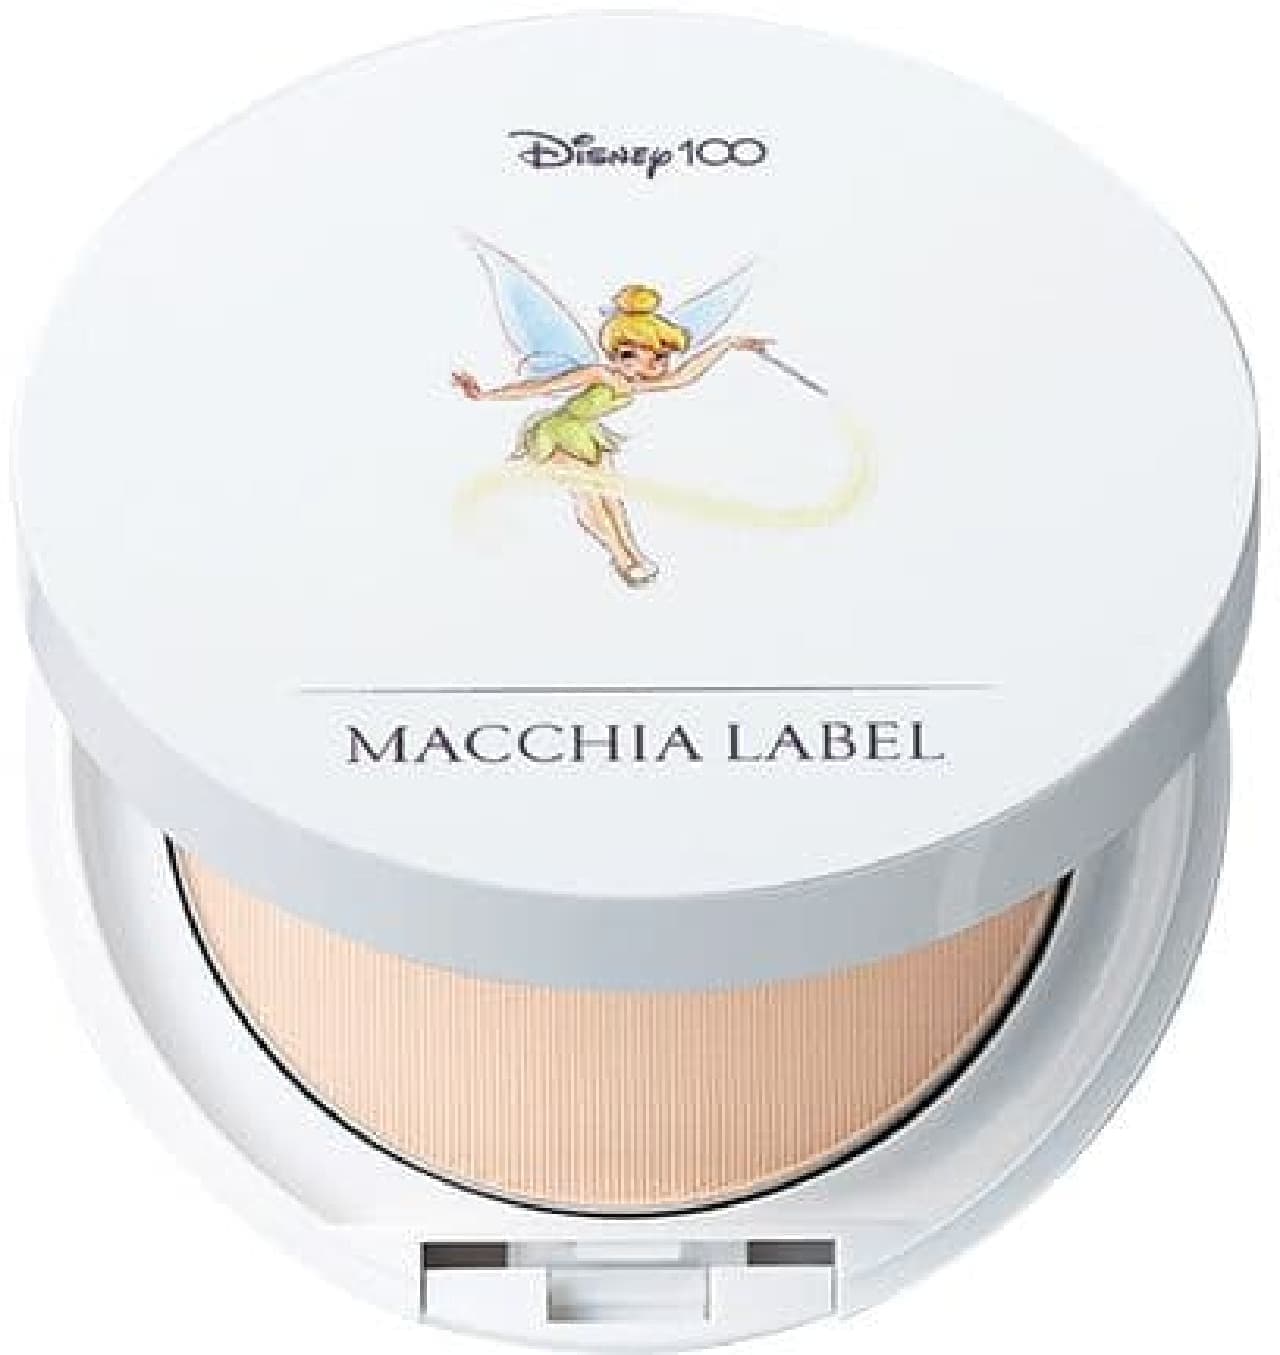 MACCHIALABEL "Face Powder Case Disney Limited Design"